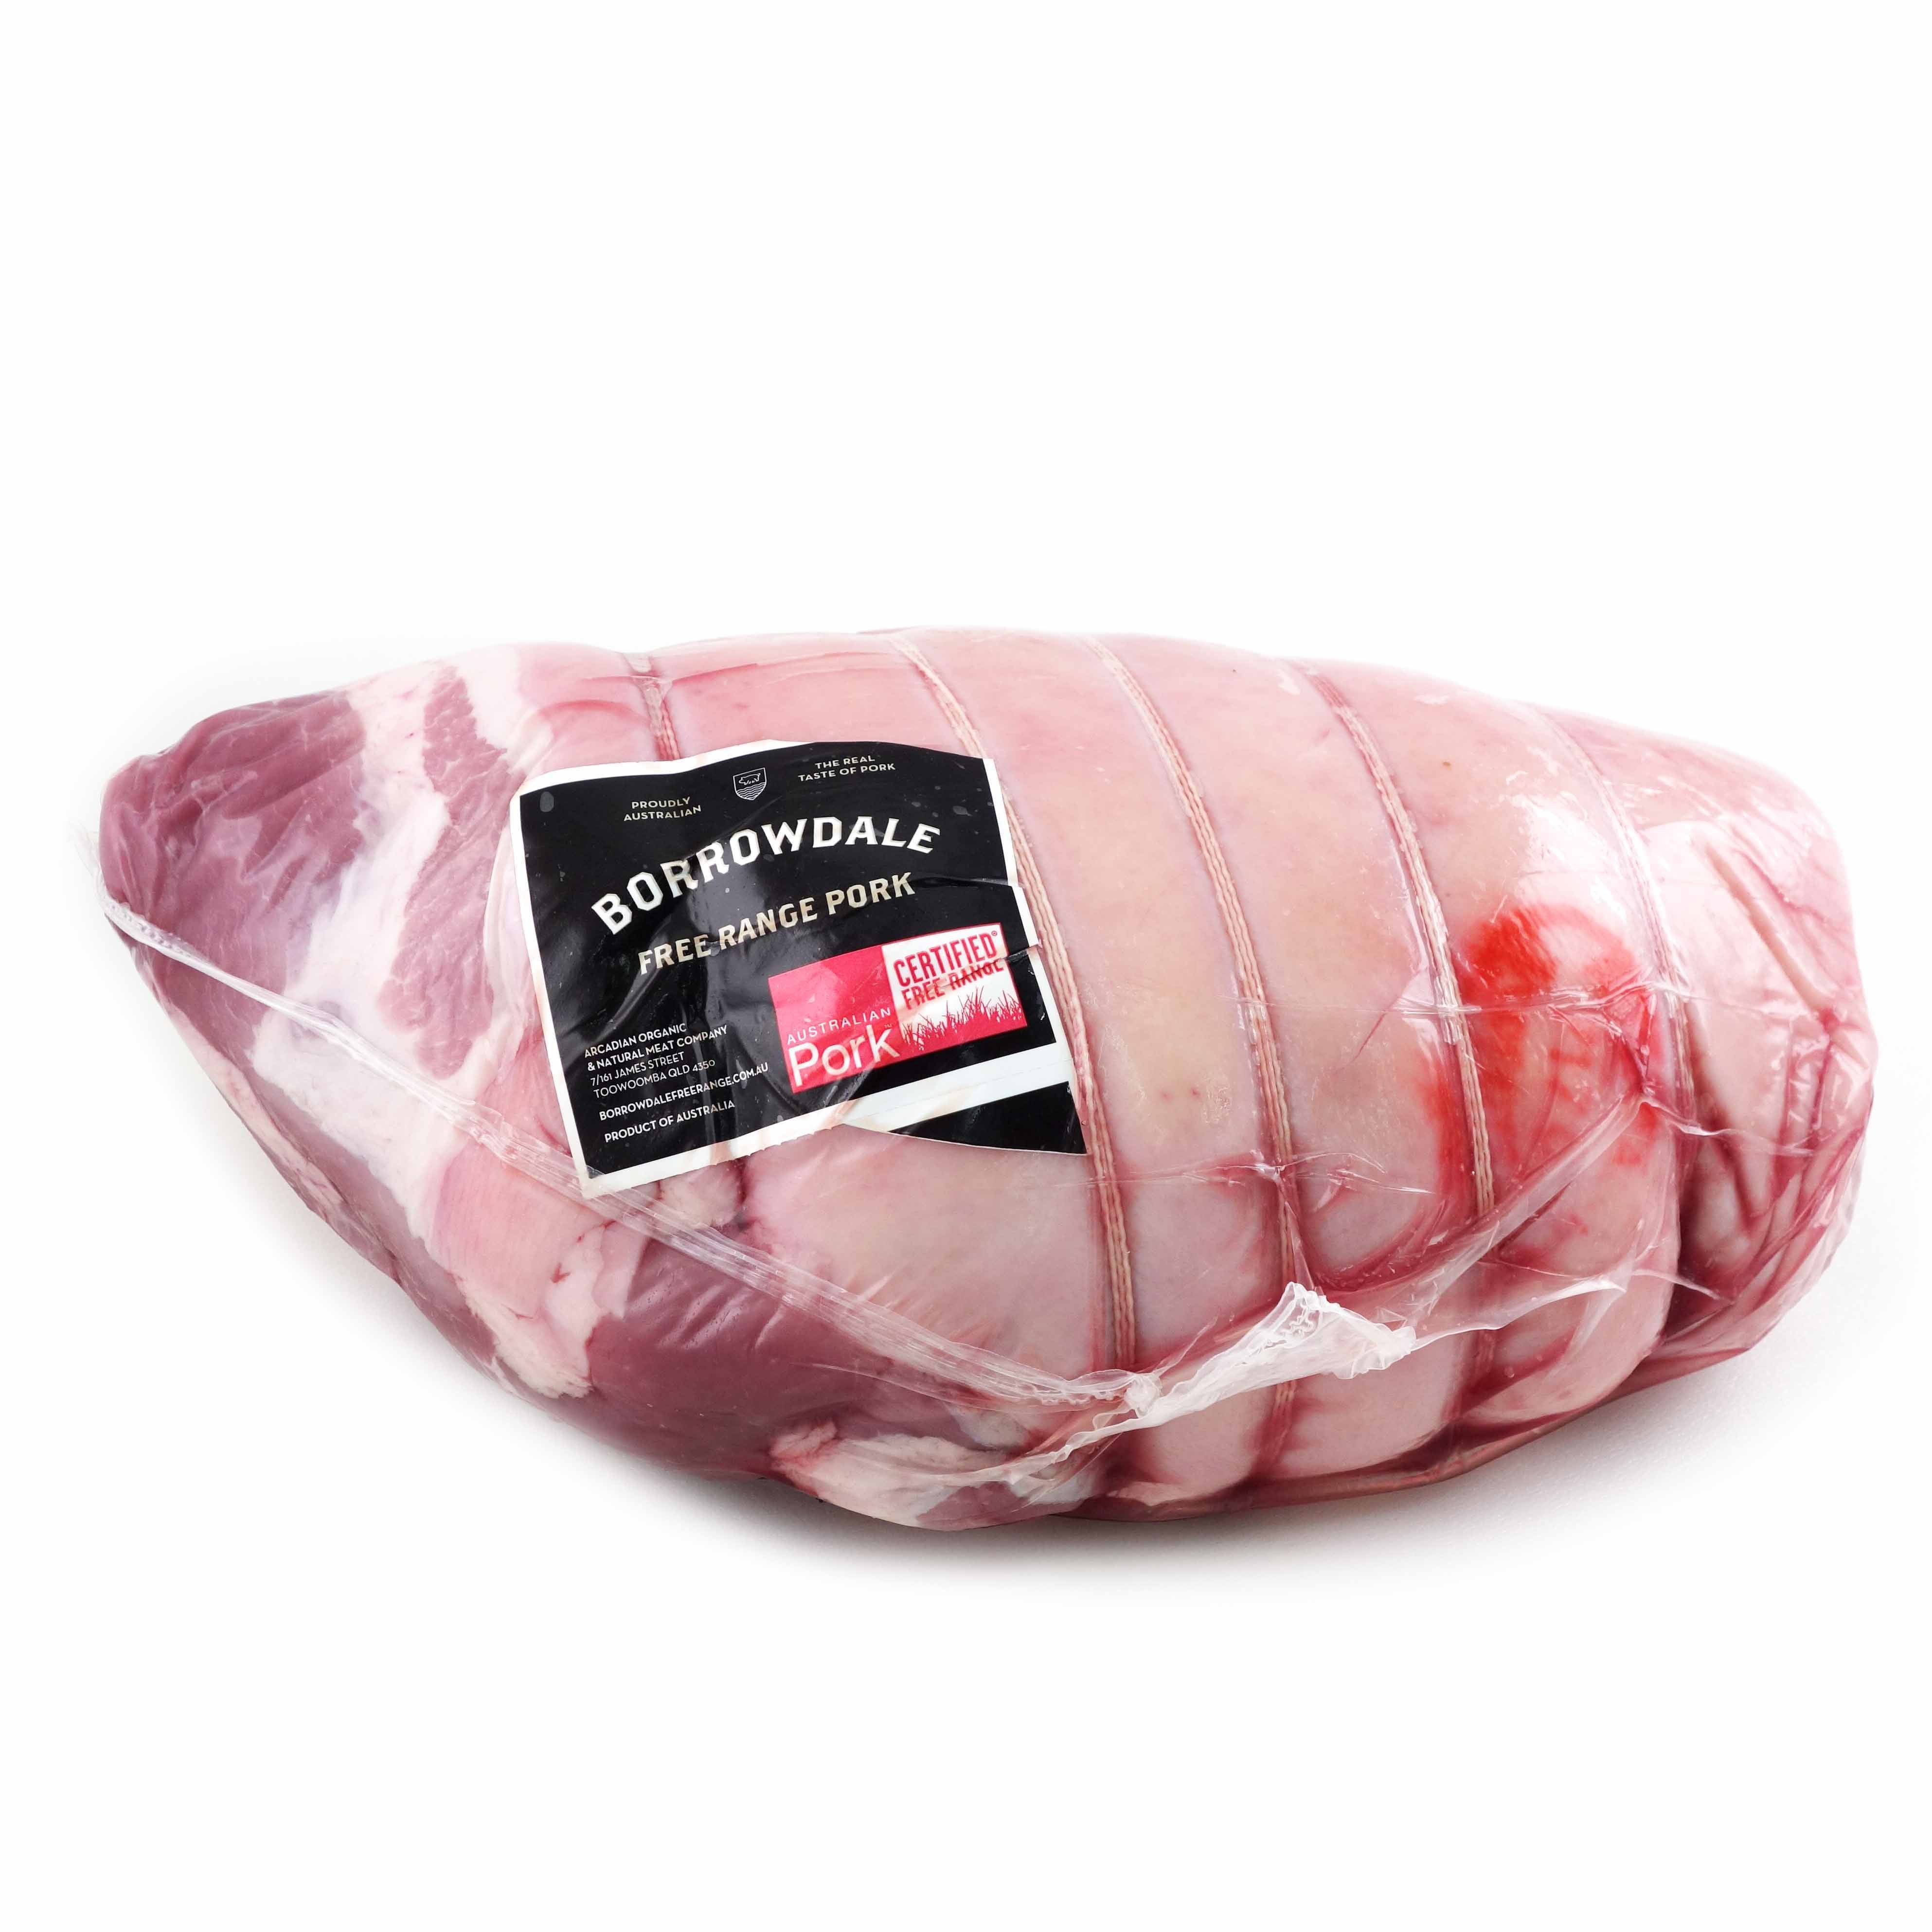 AUS Borrowdale Pork Shoulder